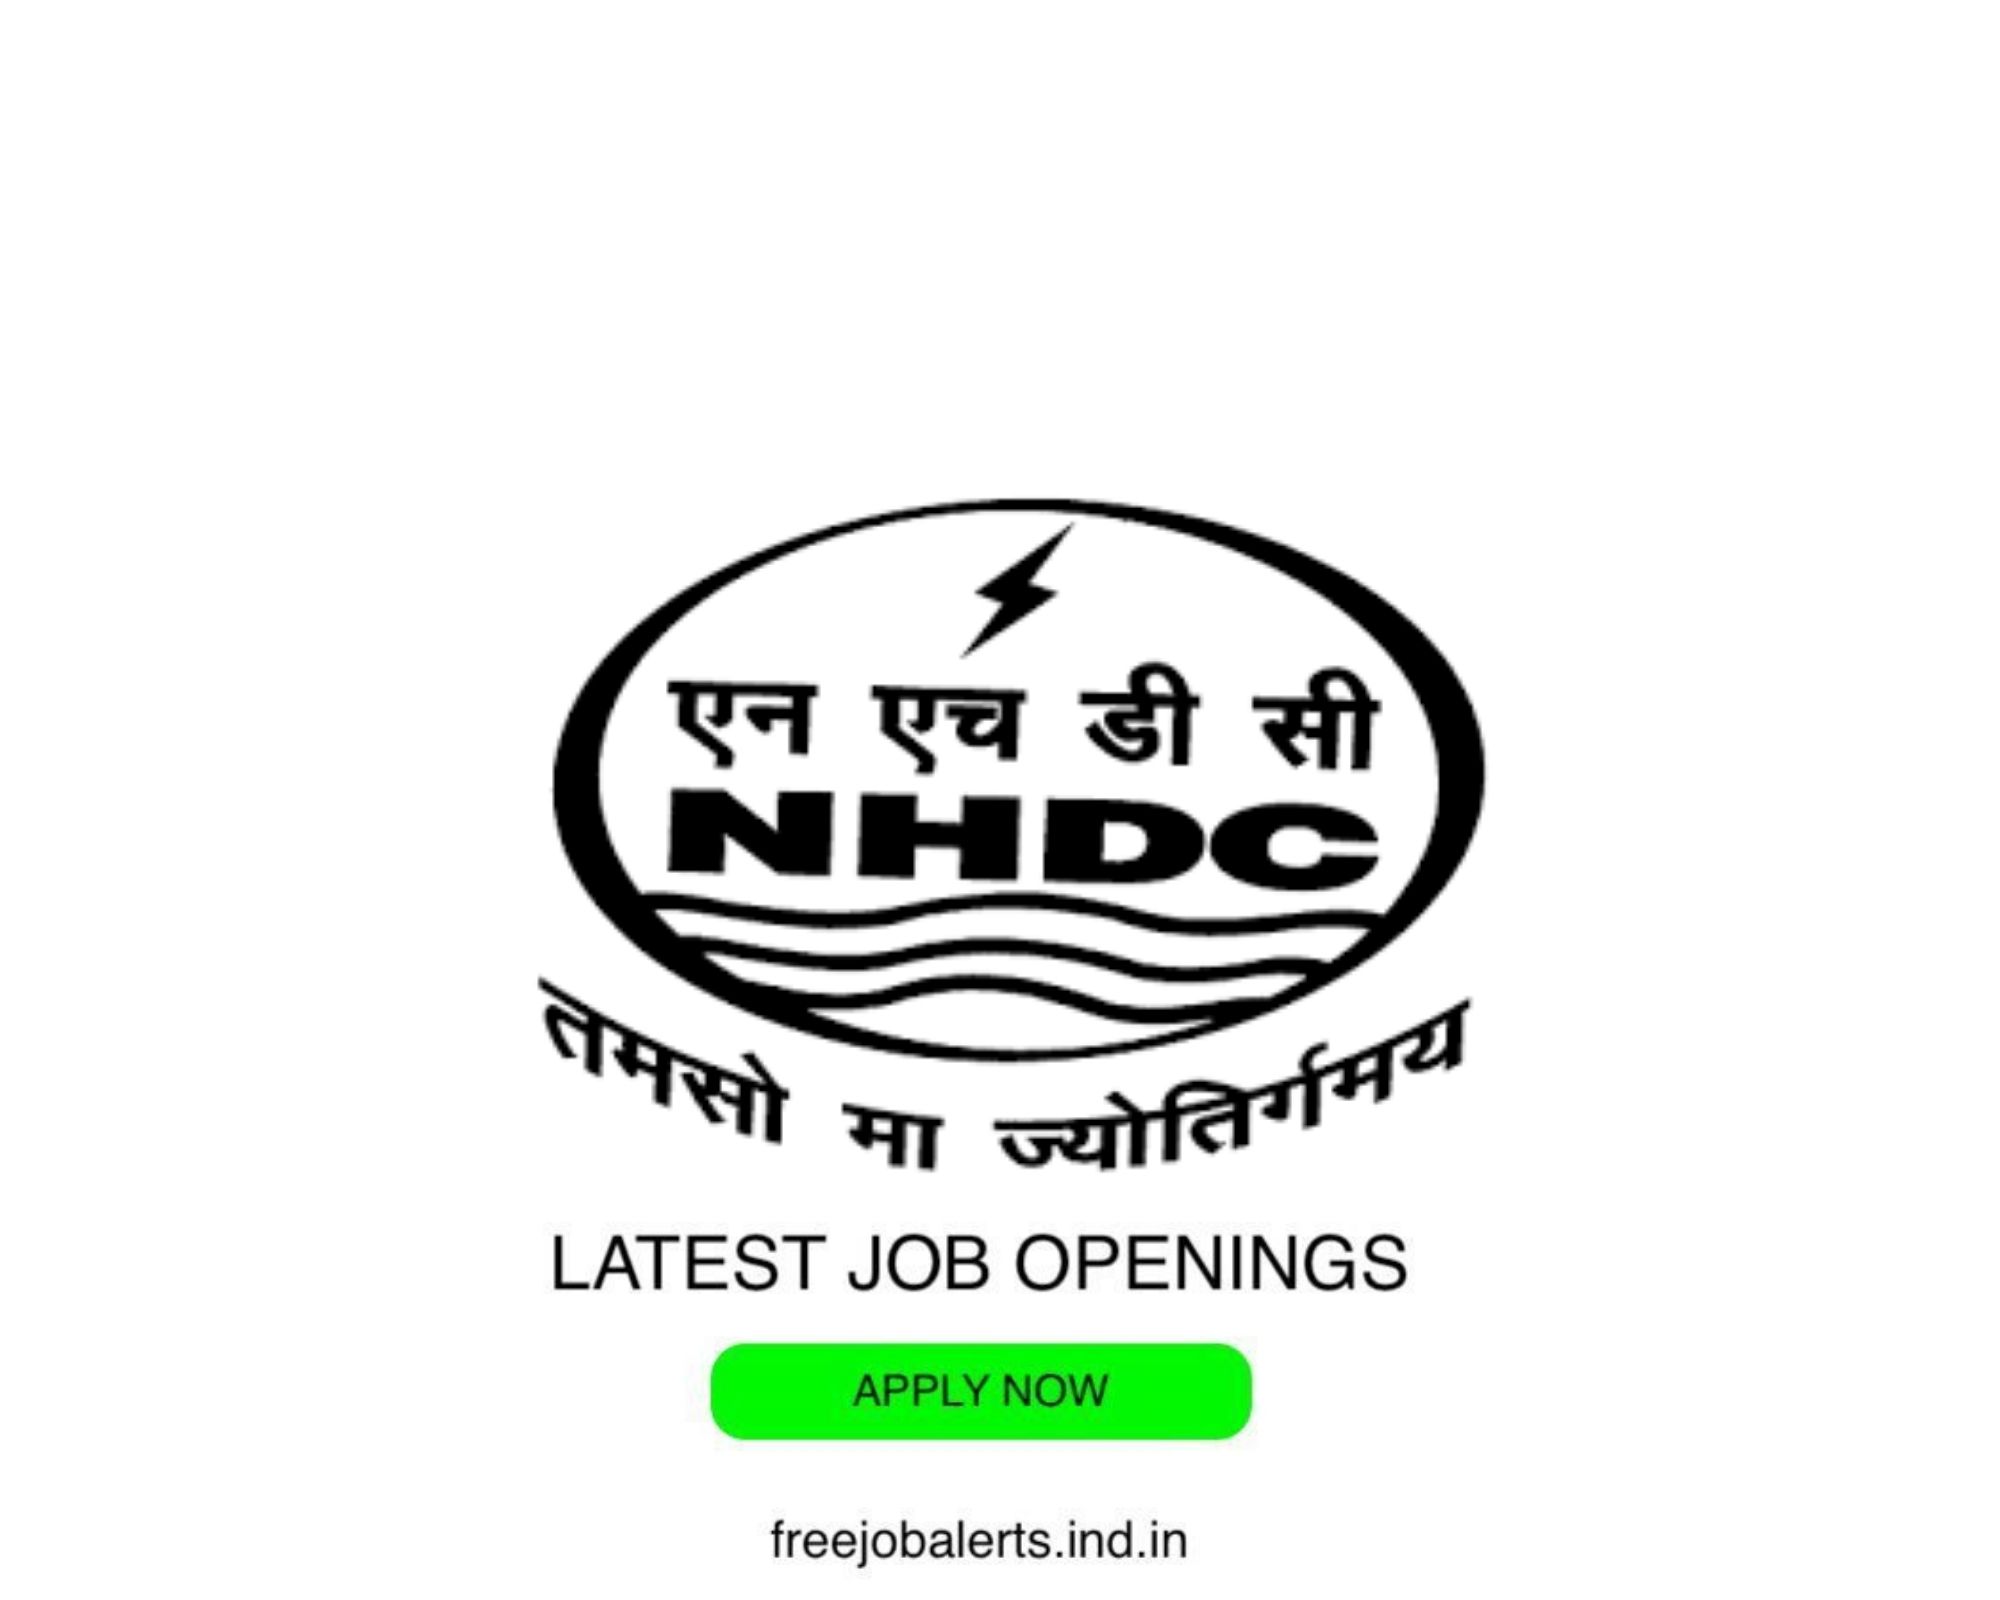 NHDC- National Handloom Development Corporation Limited- Latest Govt job openings - Free job alerts, Indian Govt Jobs